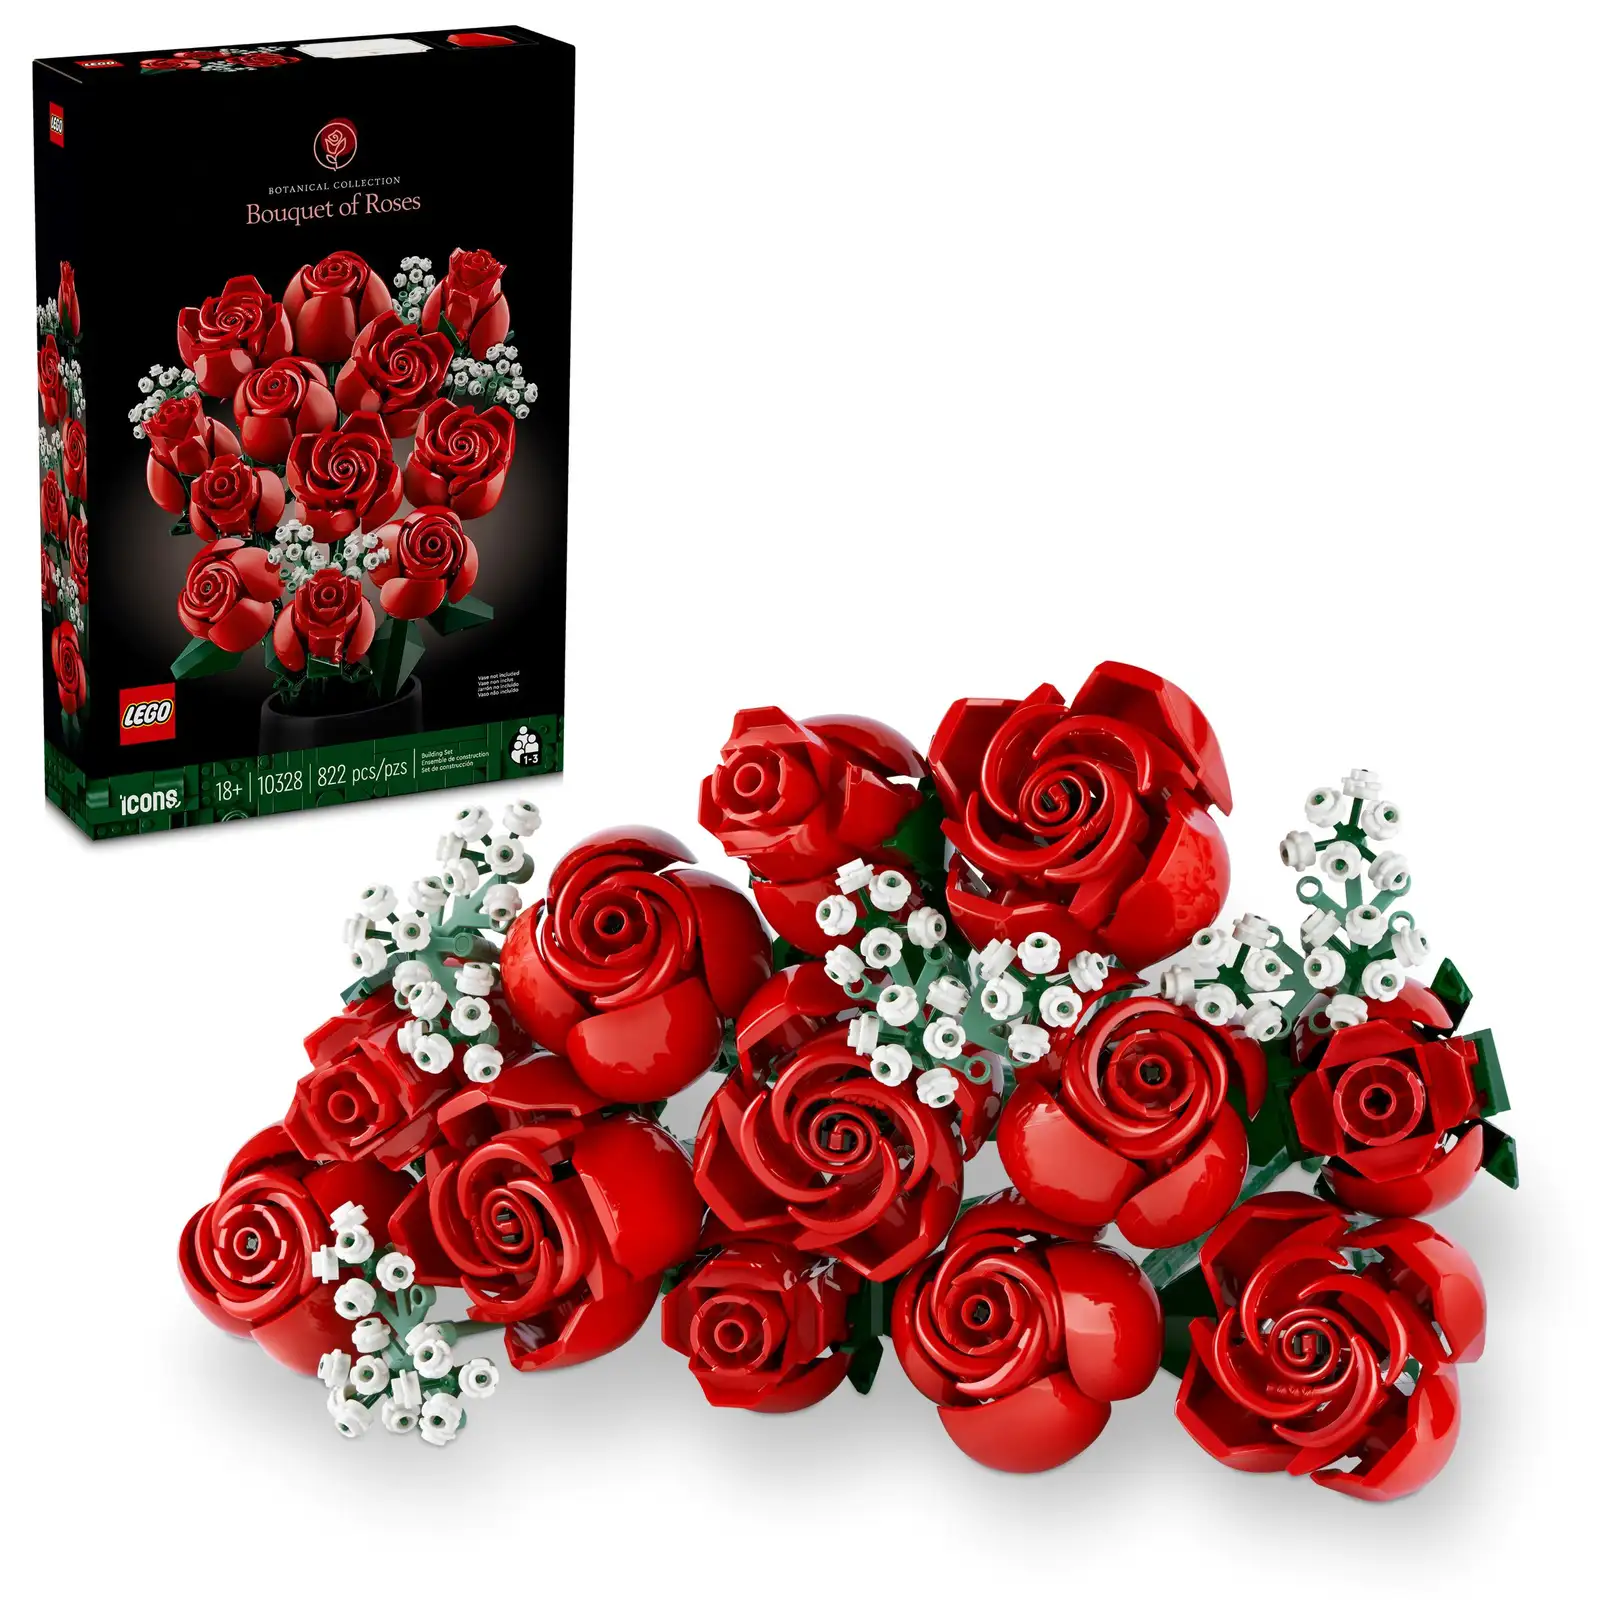 Lego Roses Bouquet Review 10328